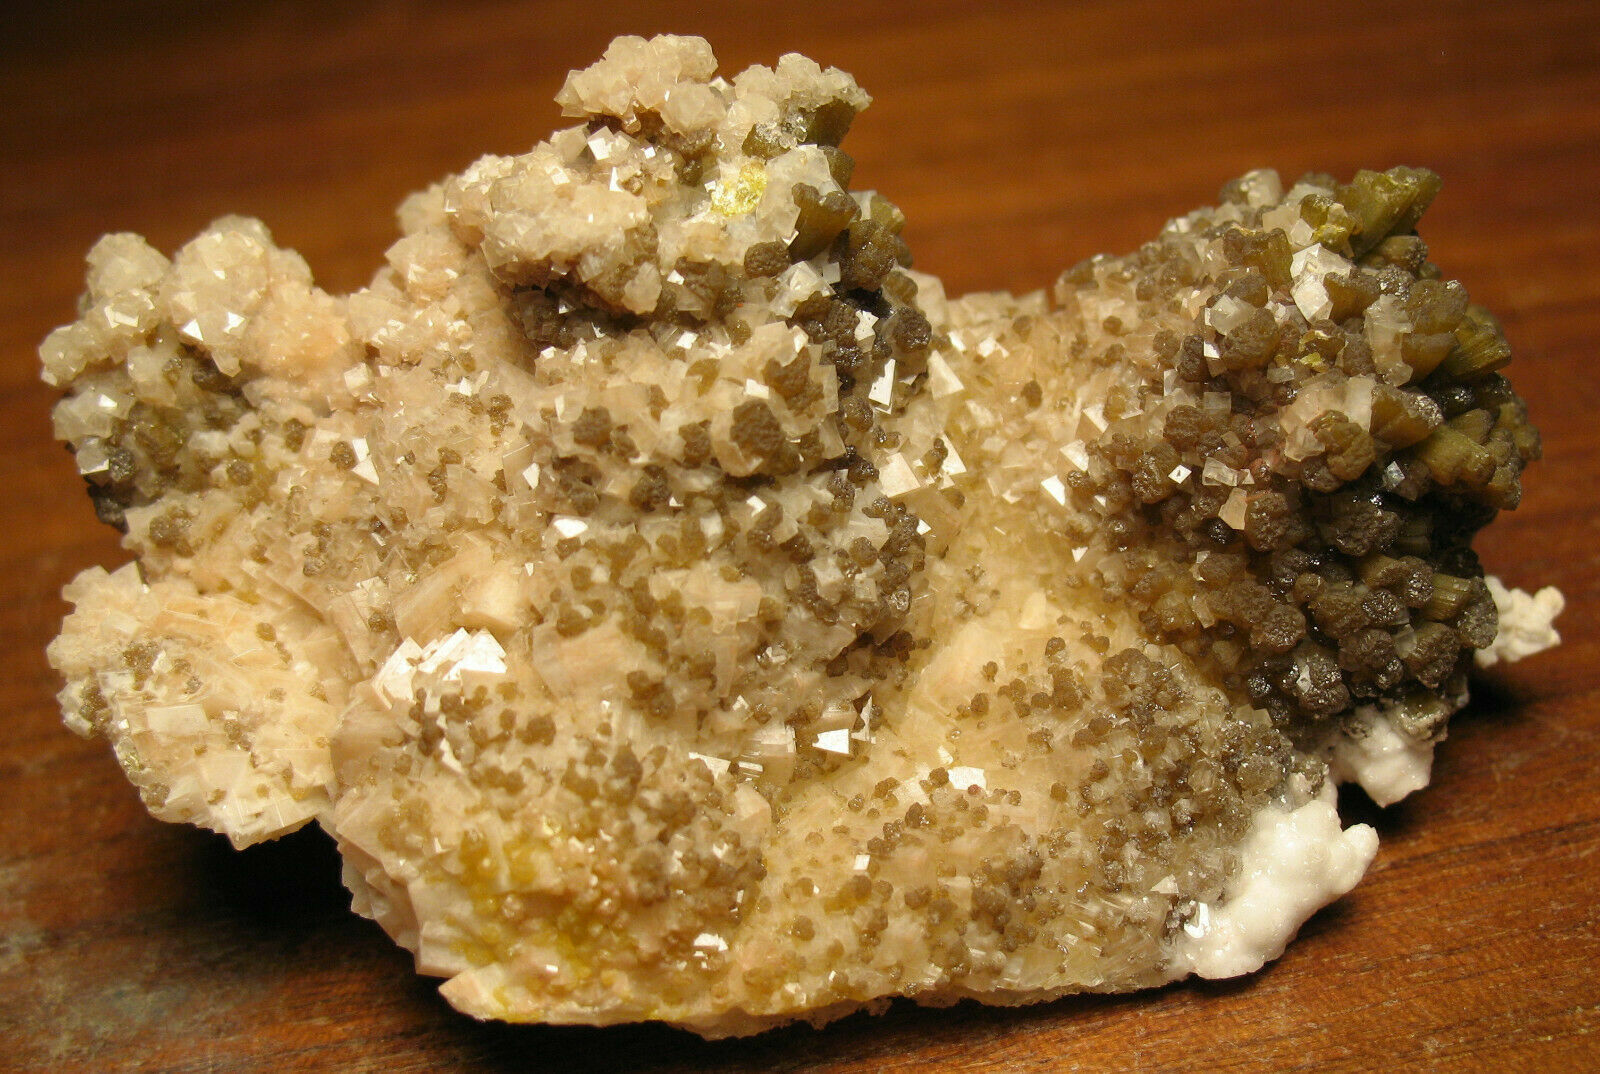 Incredible Old Specimen of Mimetite and Calcite from Mapimi, Durango, Mexico